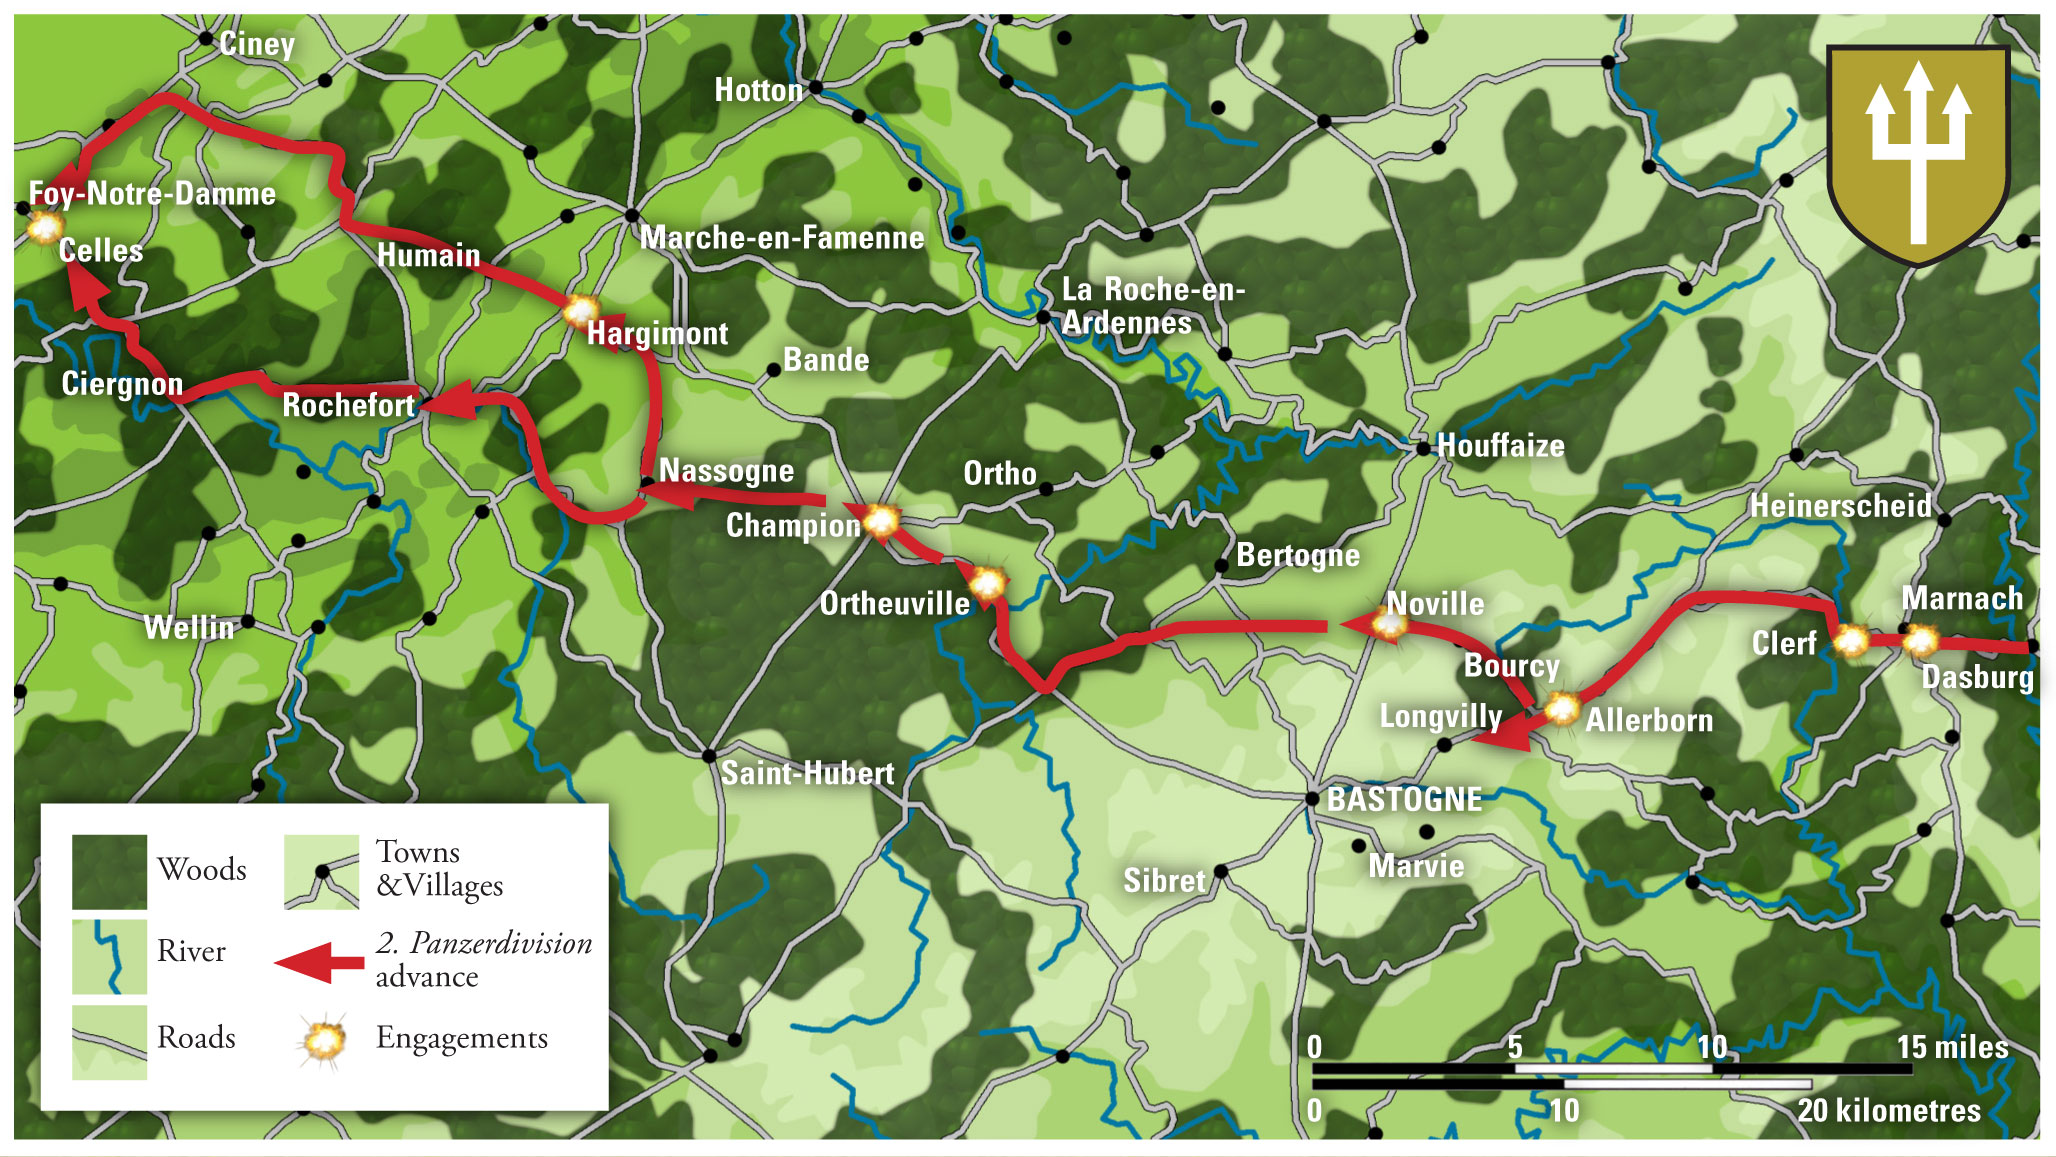 2. Panzerdivision in the Ardennes